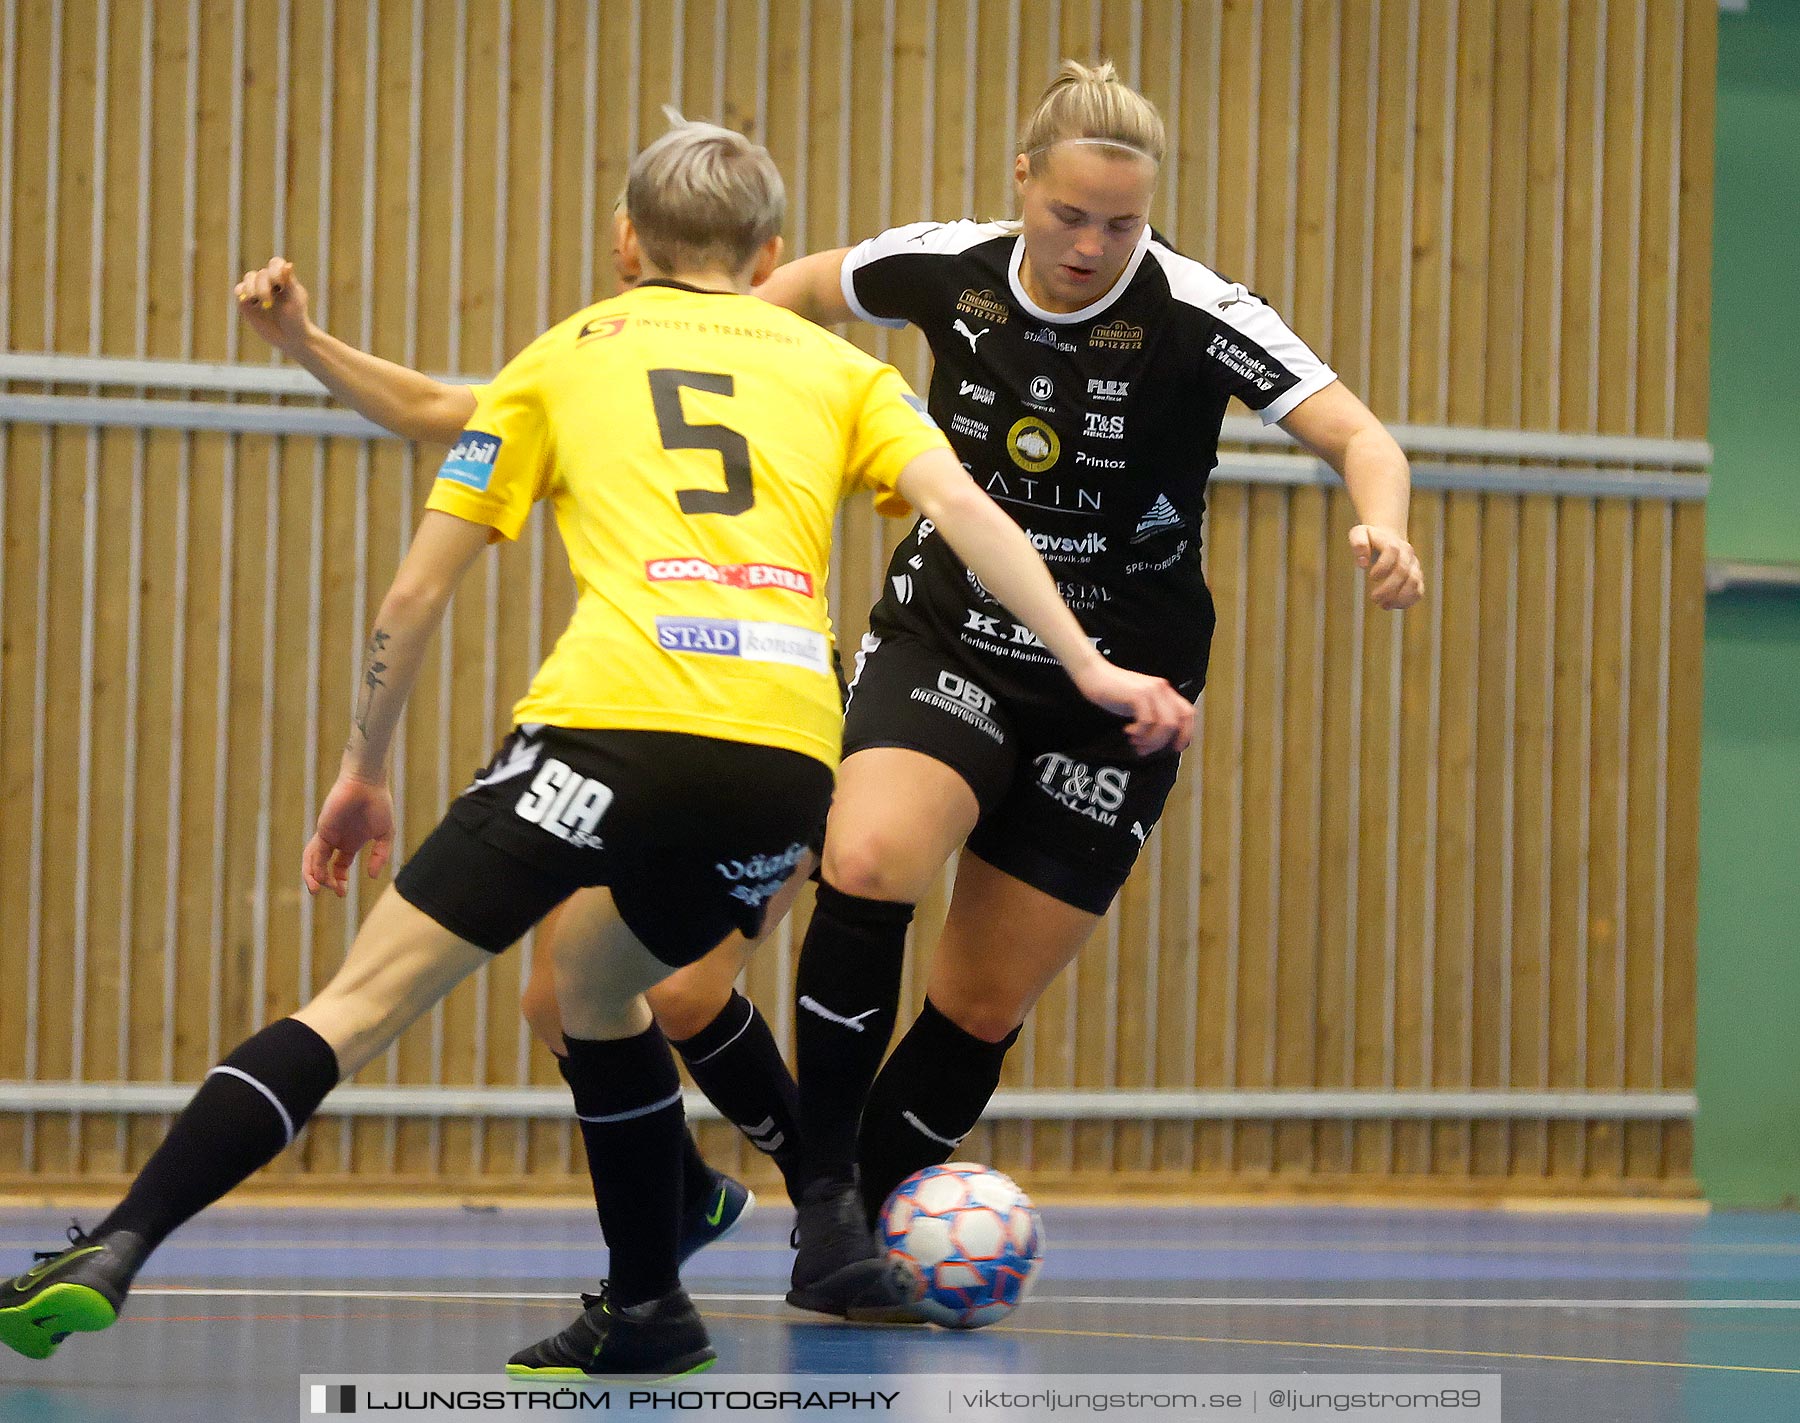 Skövde Futsalcup 2021 Damer Örebro Futsal Club-Skultorps IF 2,dam,Arena Skövde,Skövde,Sverige,Futsal,,2021,270464